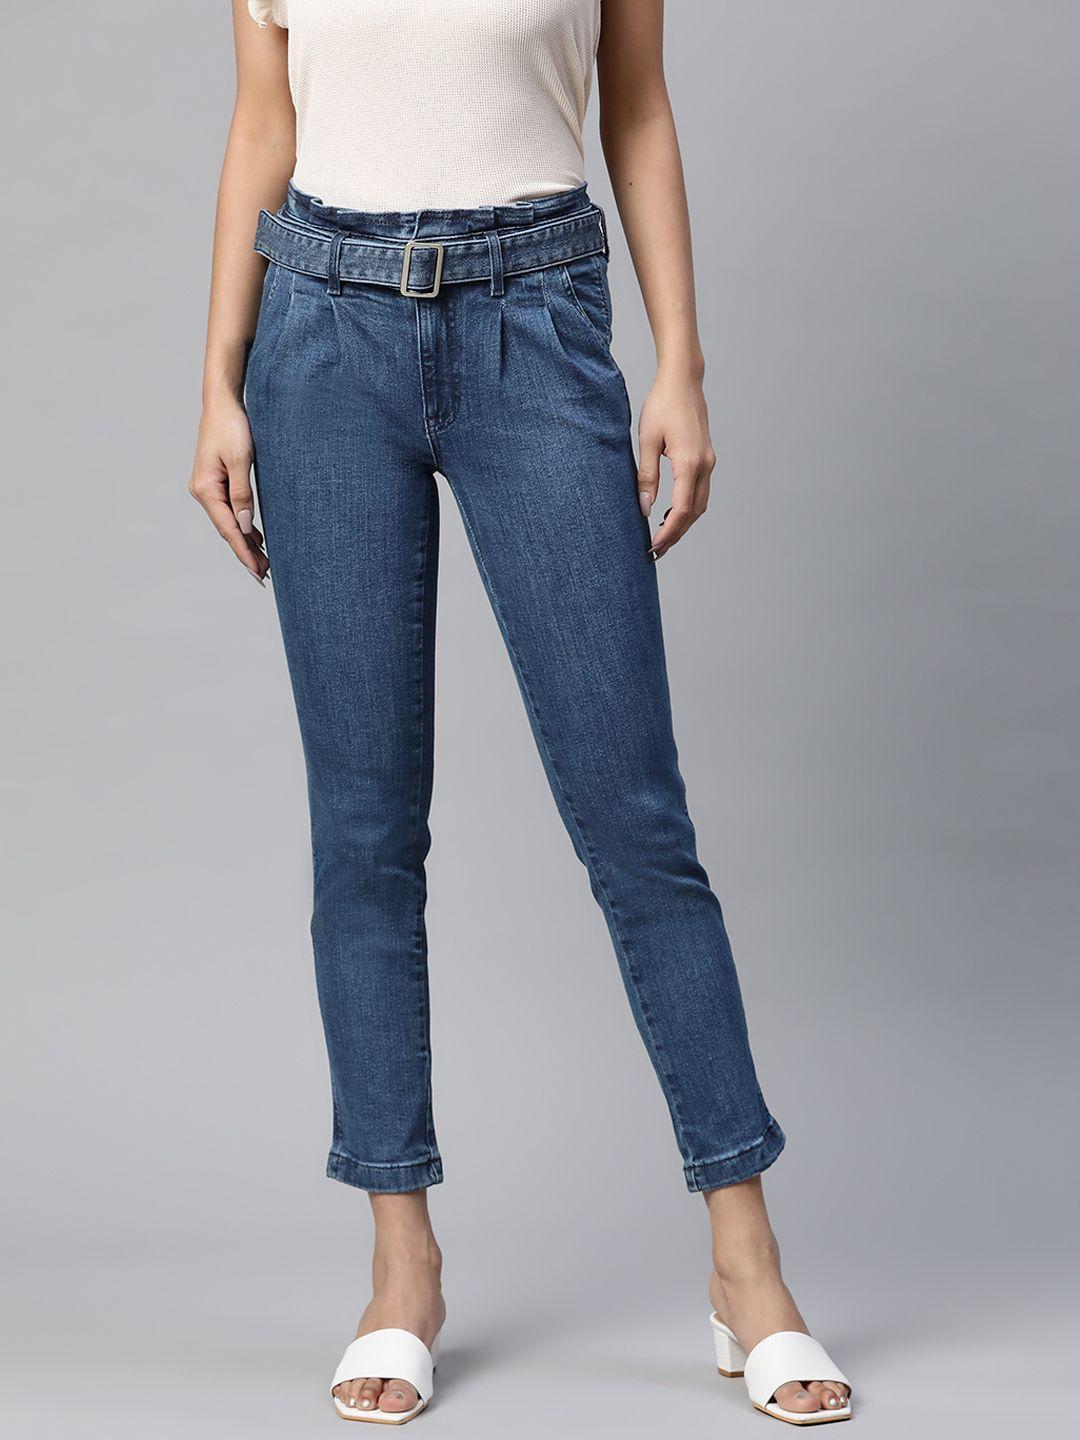 marks & spencer women navy blue slim fit stretchable jeans with belt